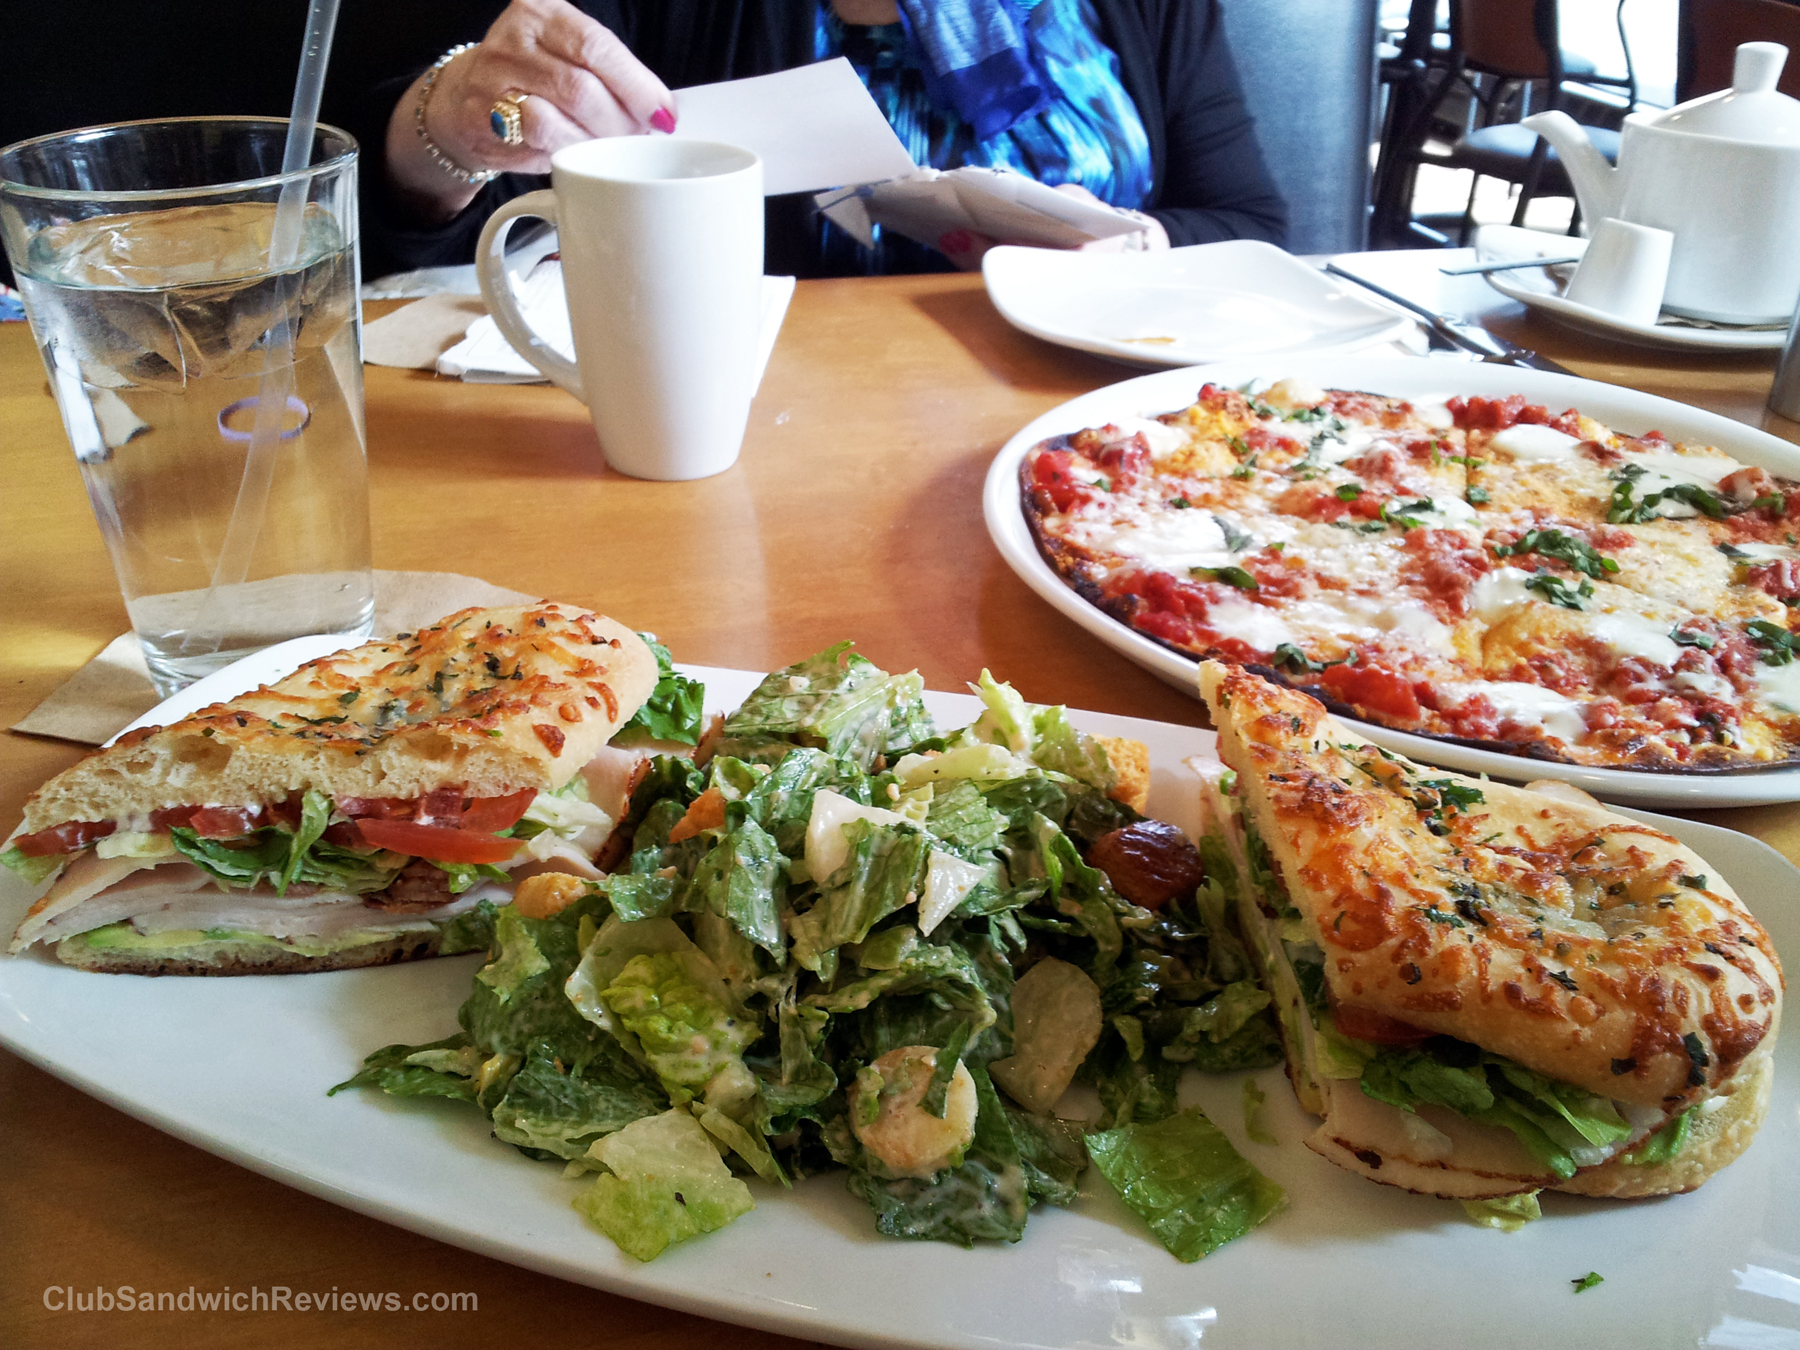 https://www.clubsandwichreviews.com/wp-content/uploads/2013/04/California-Pizza-Kitchen-Club-Sandwich.jpg